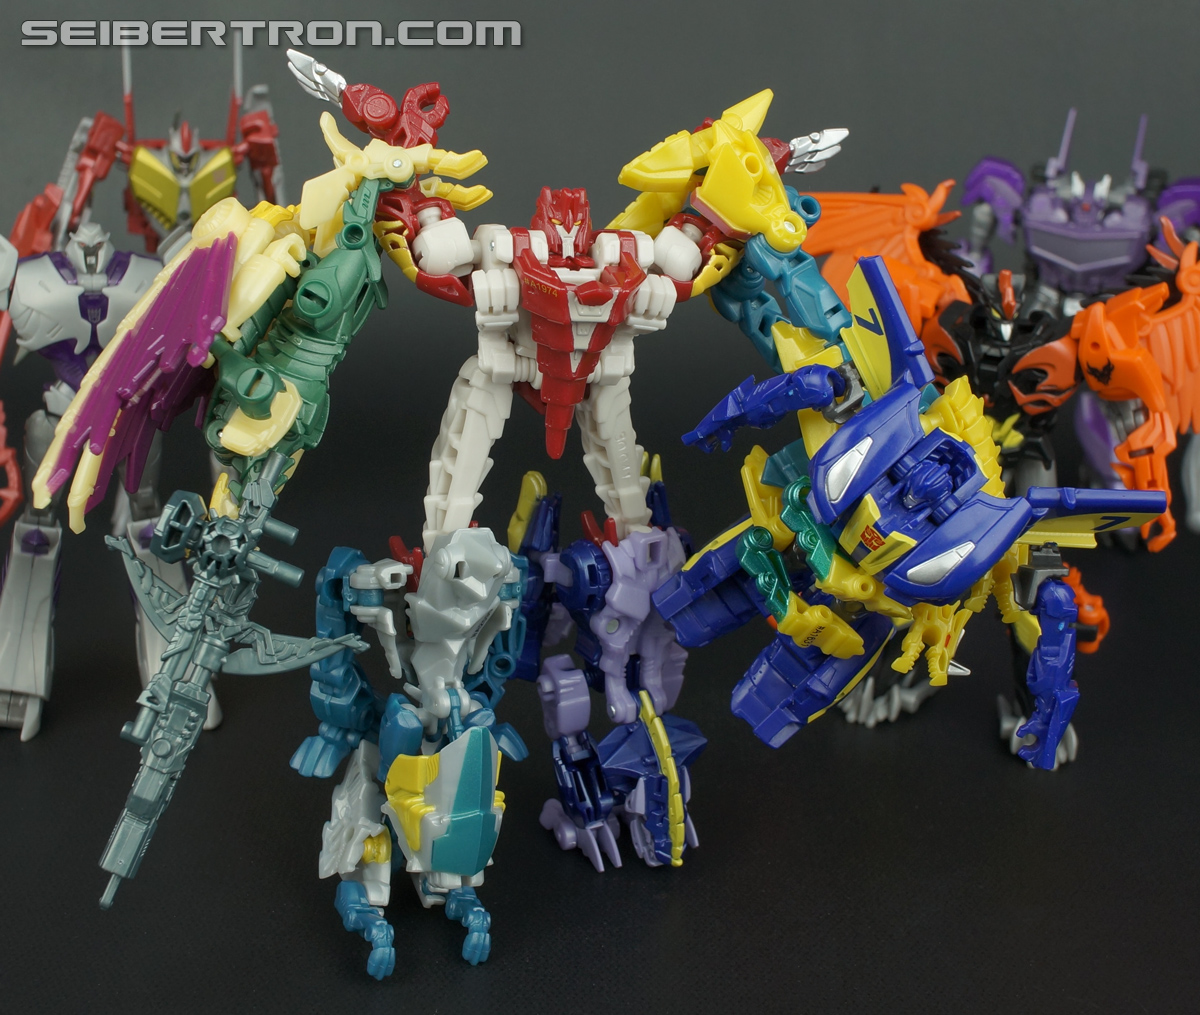 Transformers prime beast. Transformers Prime Abominus. Transformers Prime Beast Hunters Cyberverse Predacons. Трансформеры Прайм Предаконы игрушки абоминус. Трансформеры Прайм Предаконы игрушки абосинус.